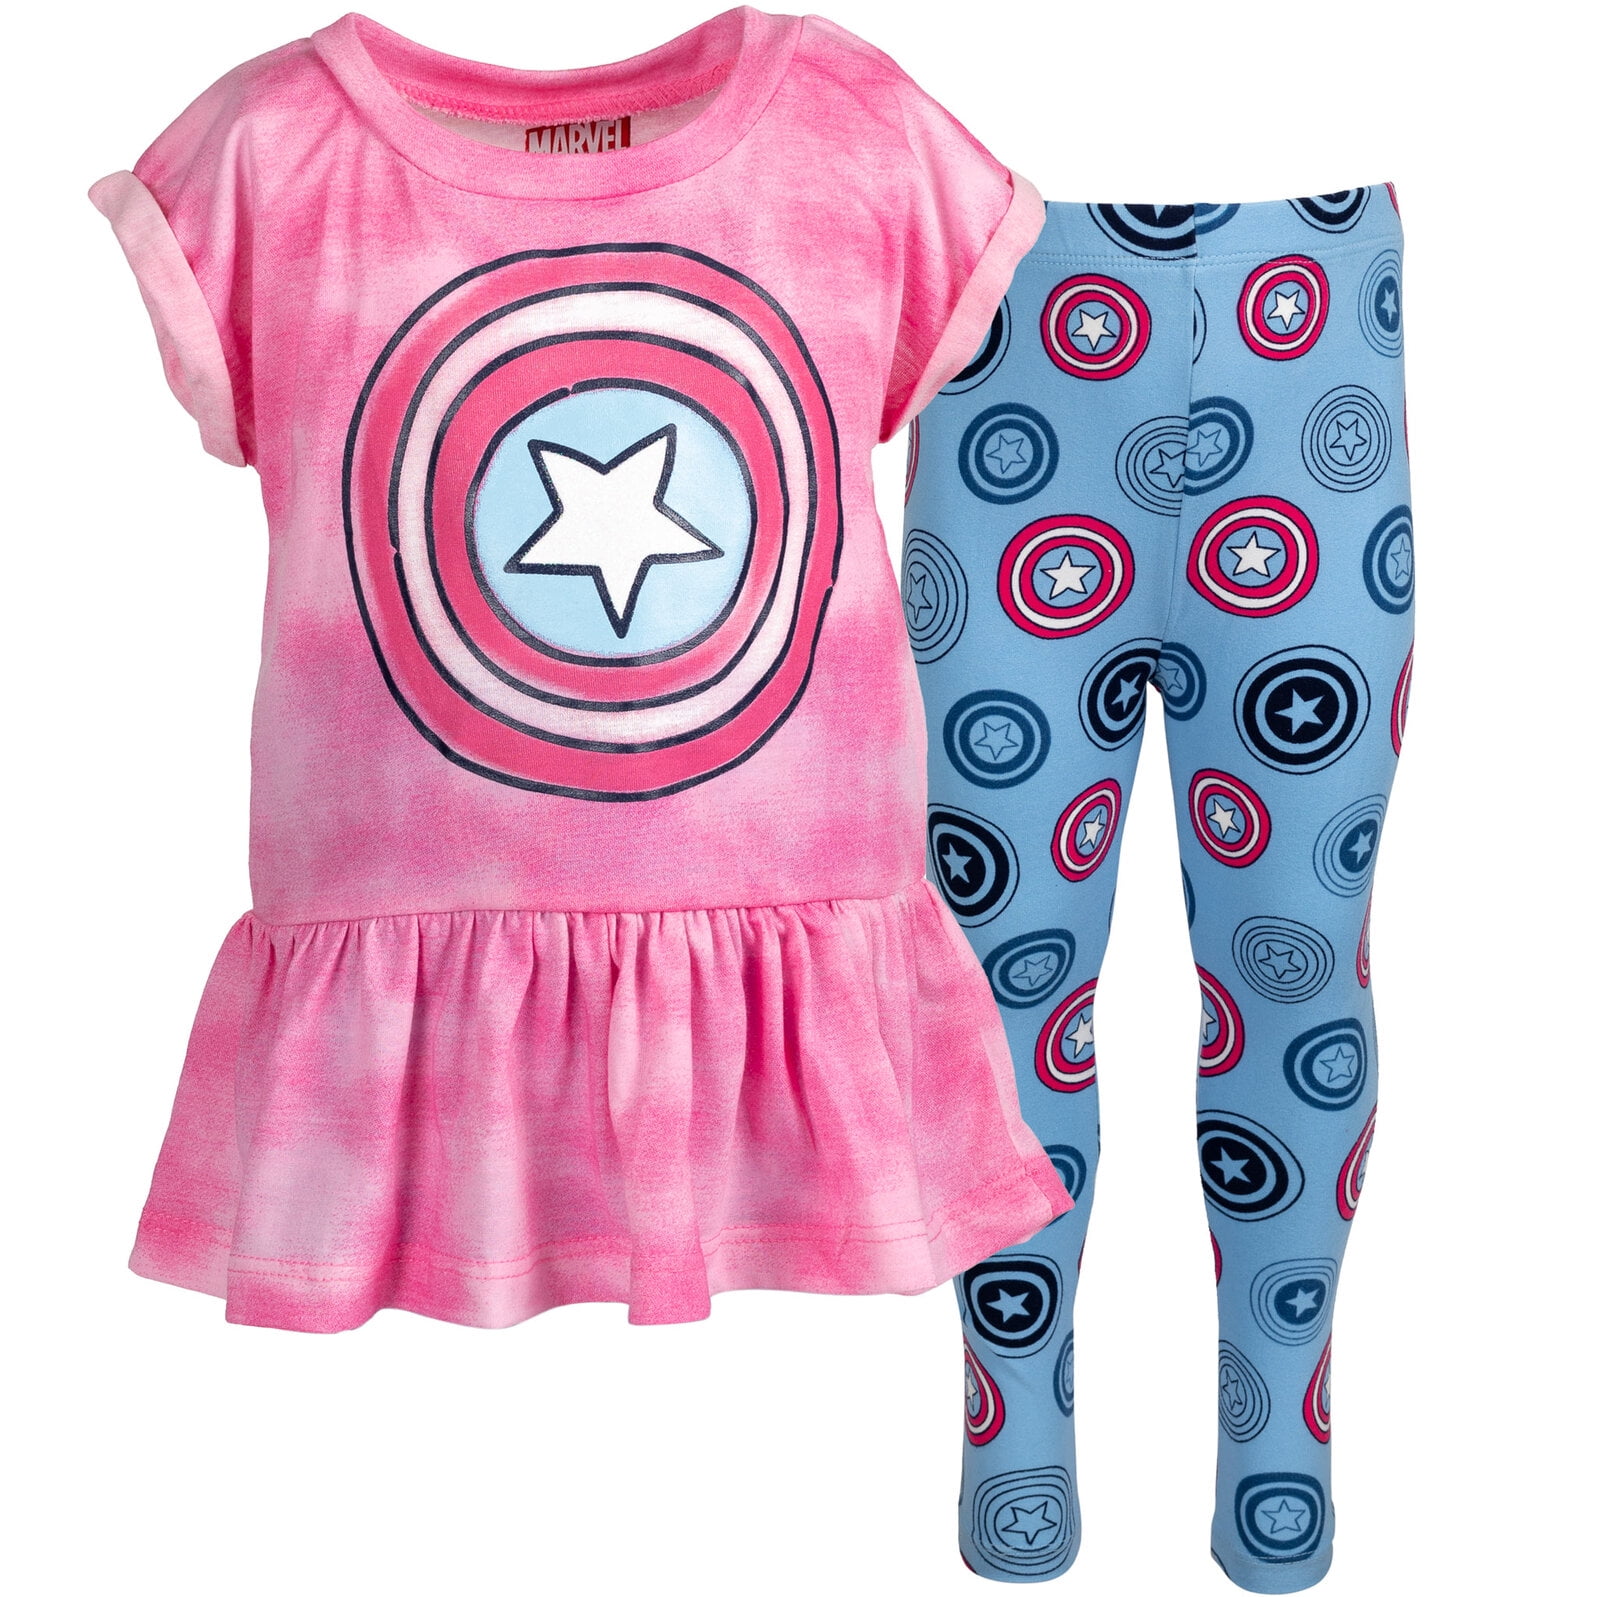 Marvel Avengers Captain America Big Girls Peplum T Shirt and Leggings Outfit Set Toddler to Big Kid 4000af67 acd5 4480 b736 9da70ee9987d.00c86552a5145406bddbbd75b042a9cf